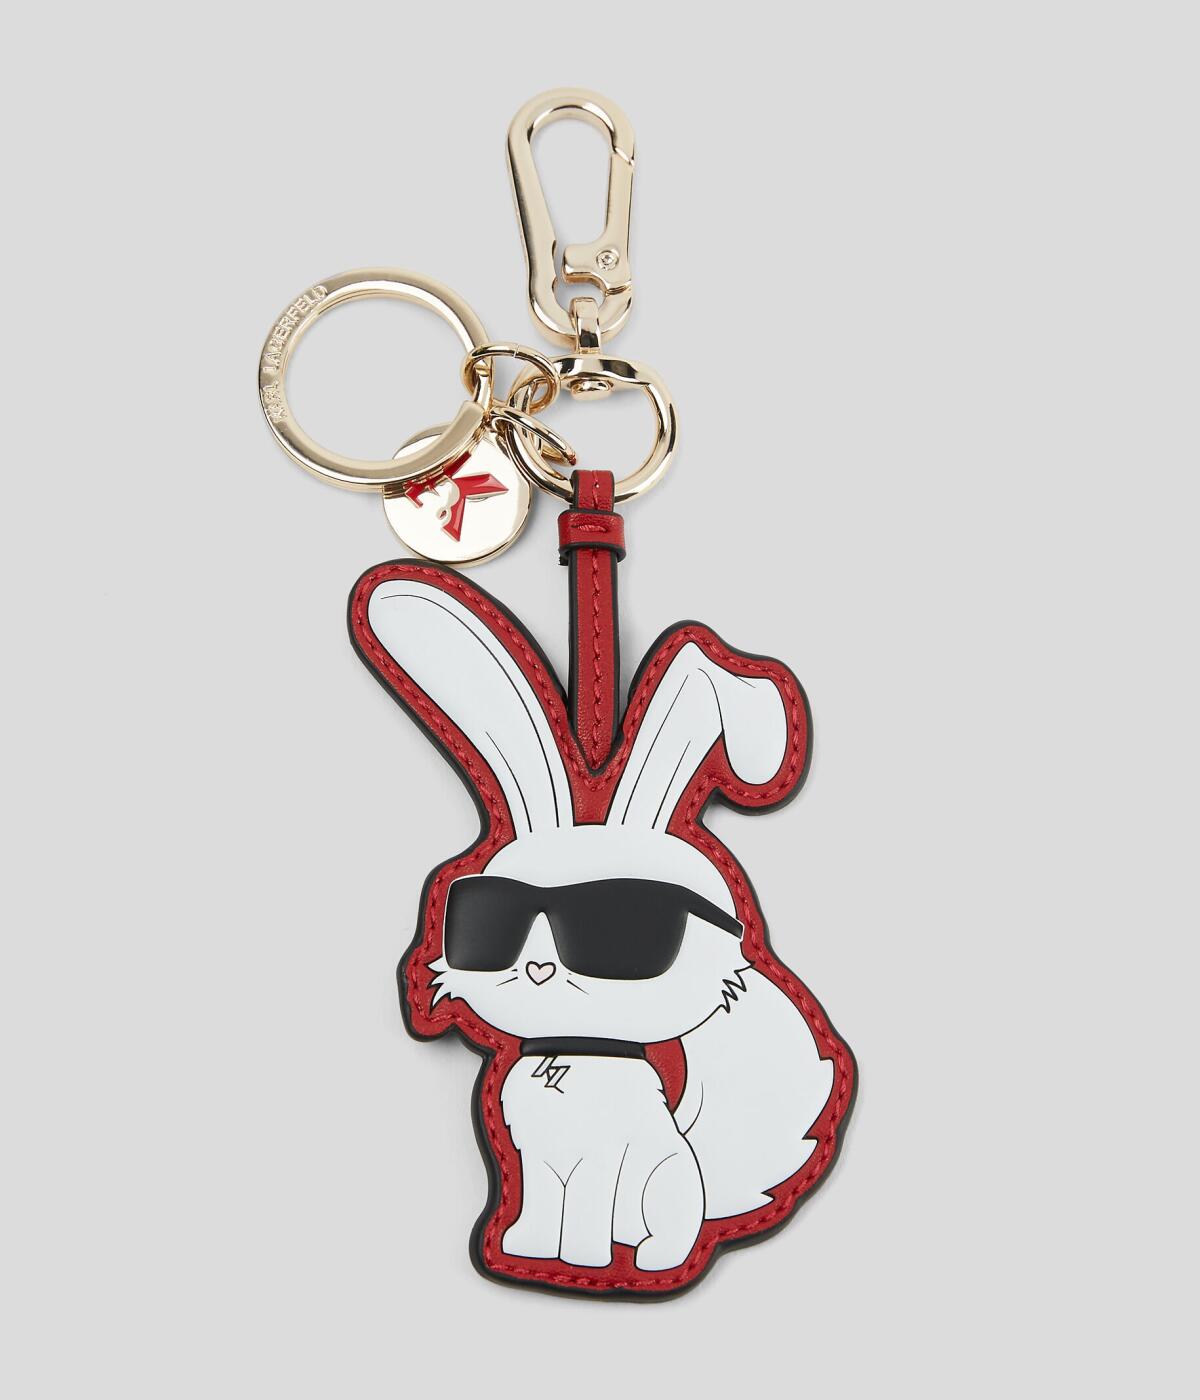 Rabbit shaped keychain